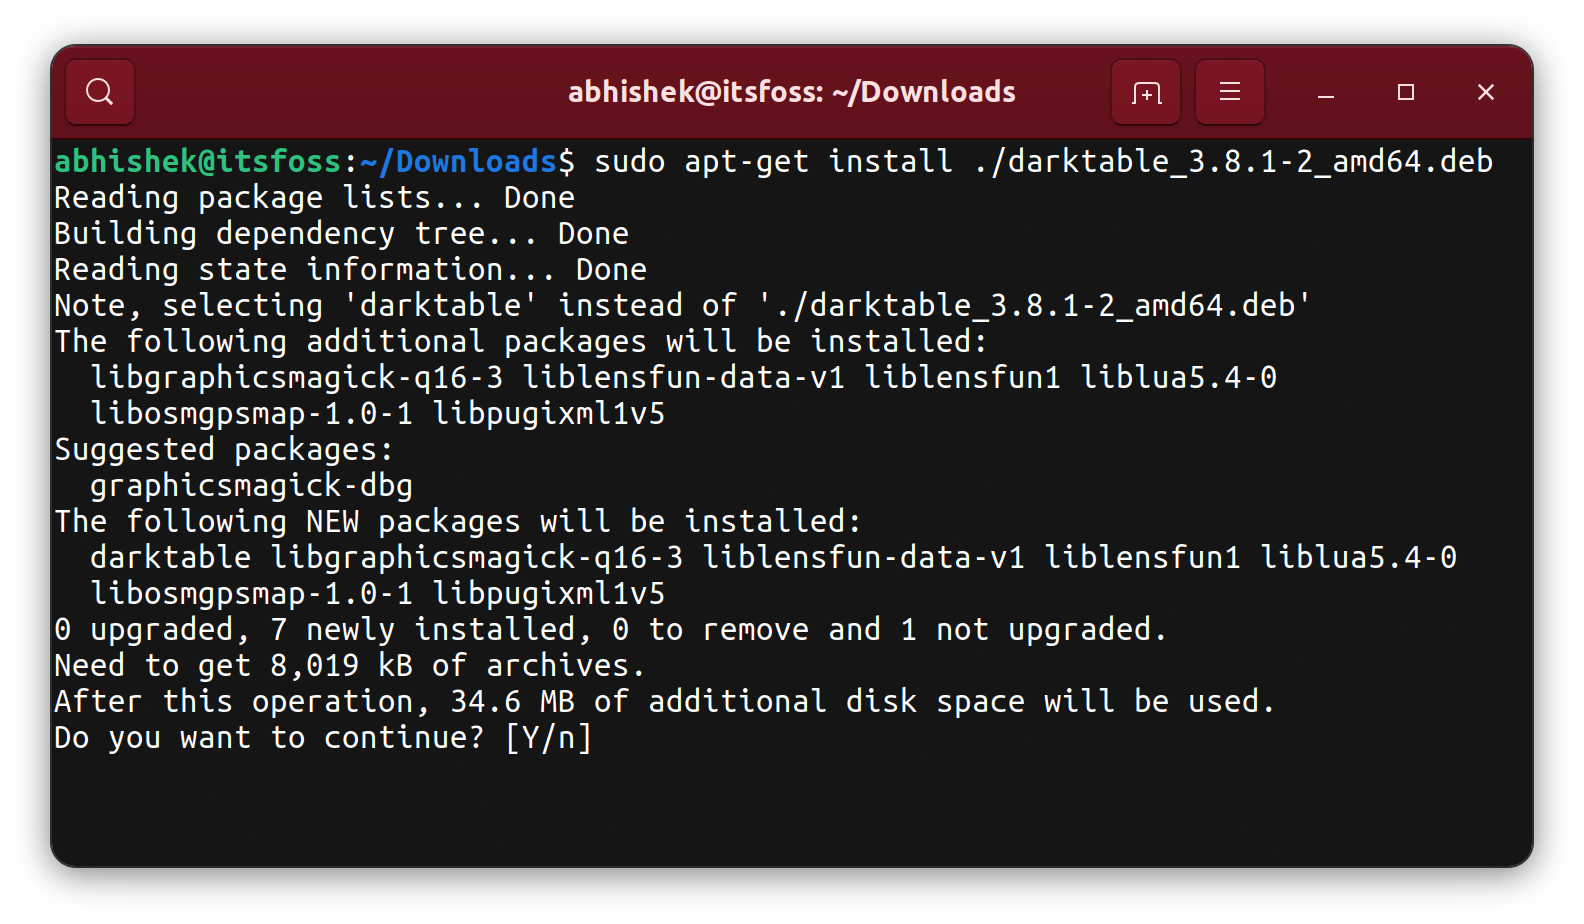 Using apt-get command to install DEB files in Ubuntu